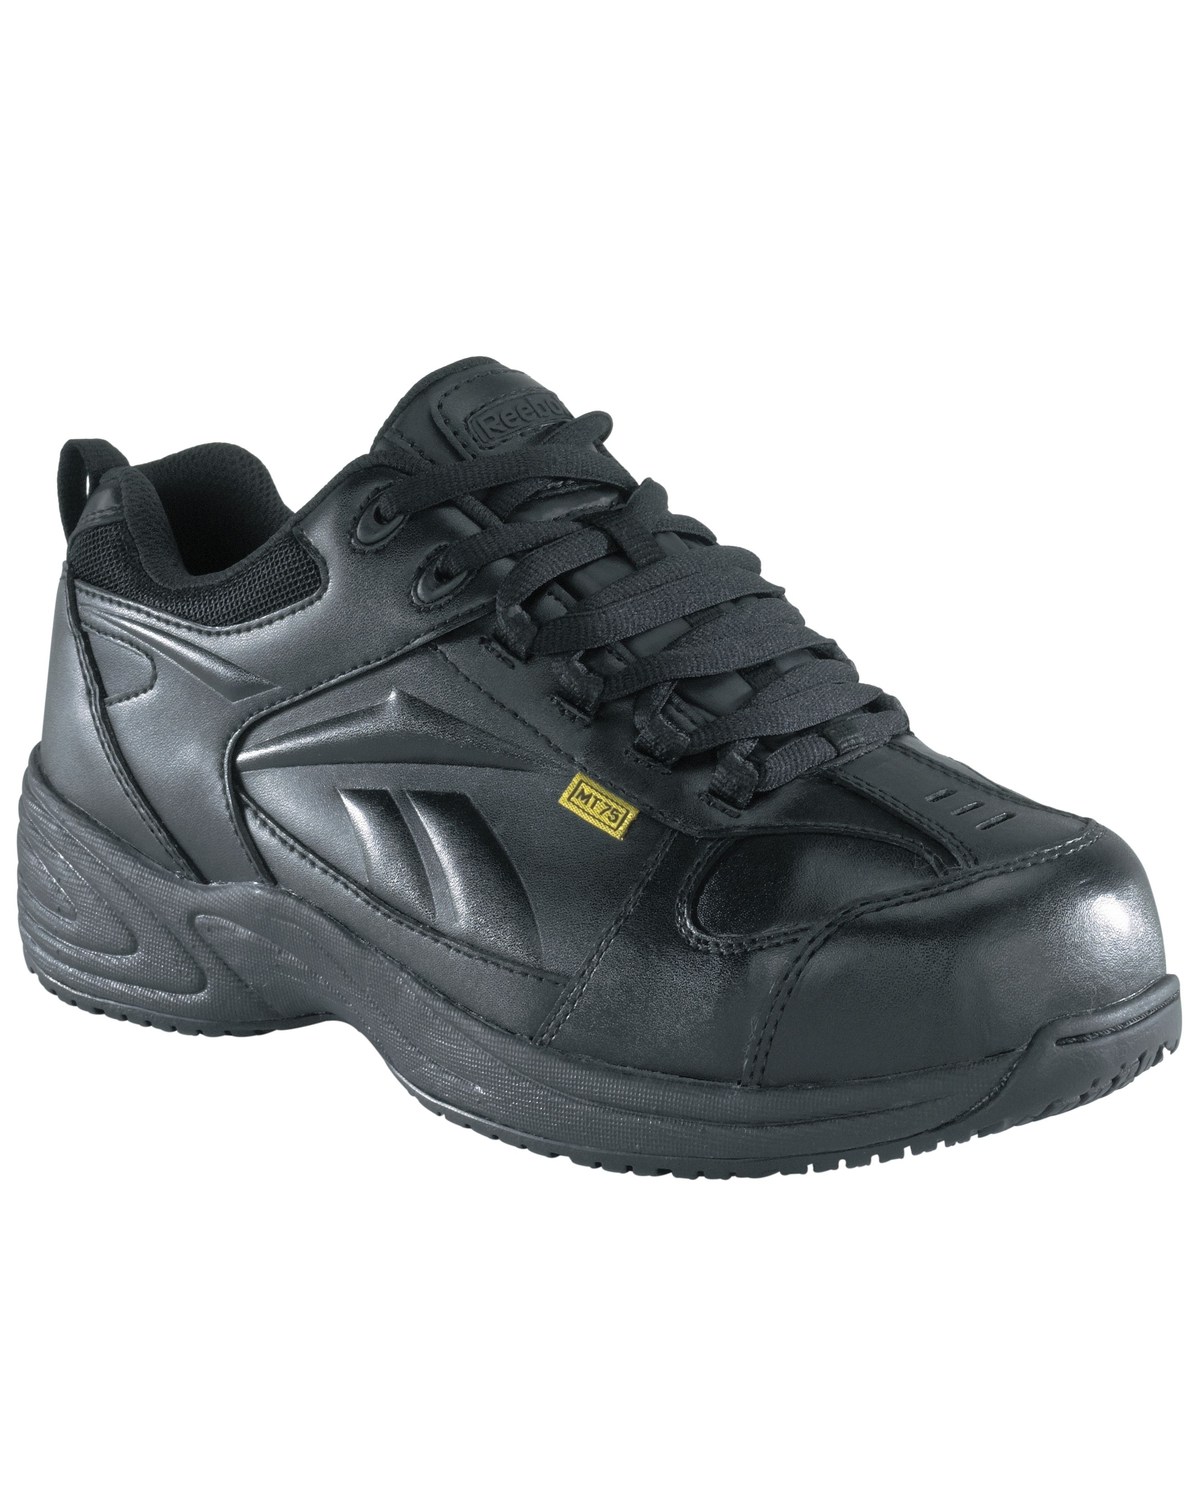 Reebok Men's Centose Internal Met Guard Work Shoes - Composite Toe